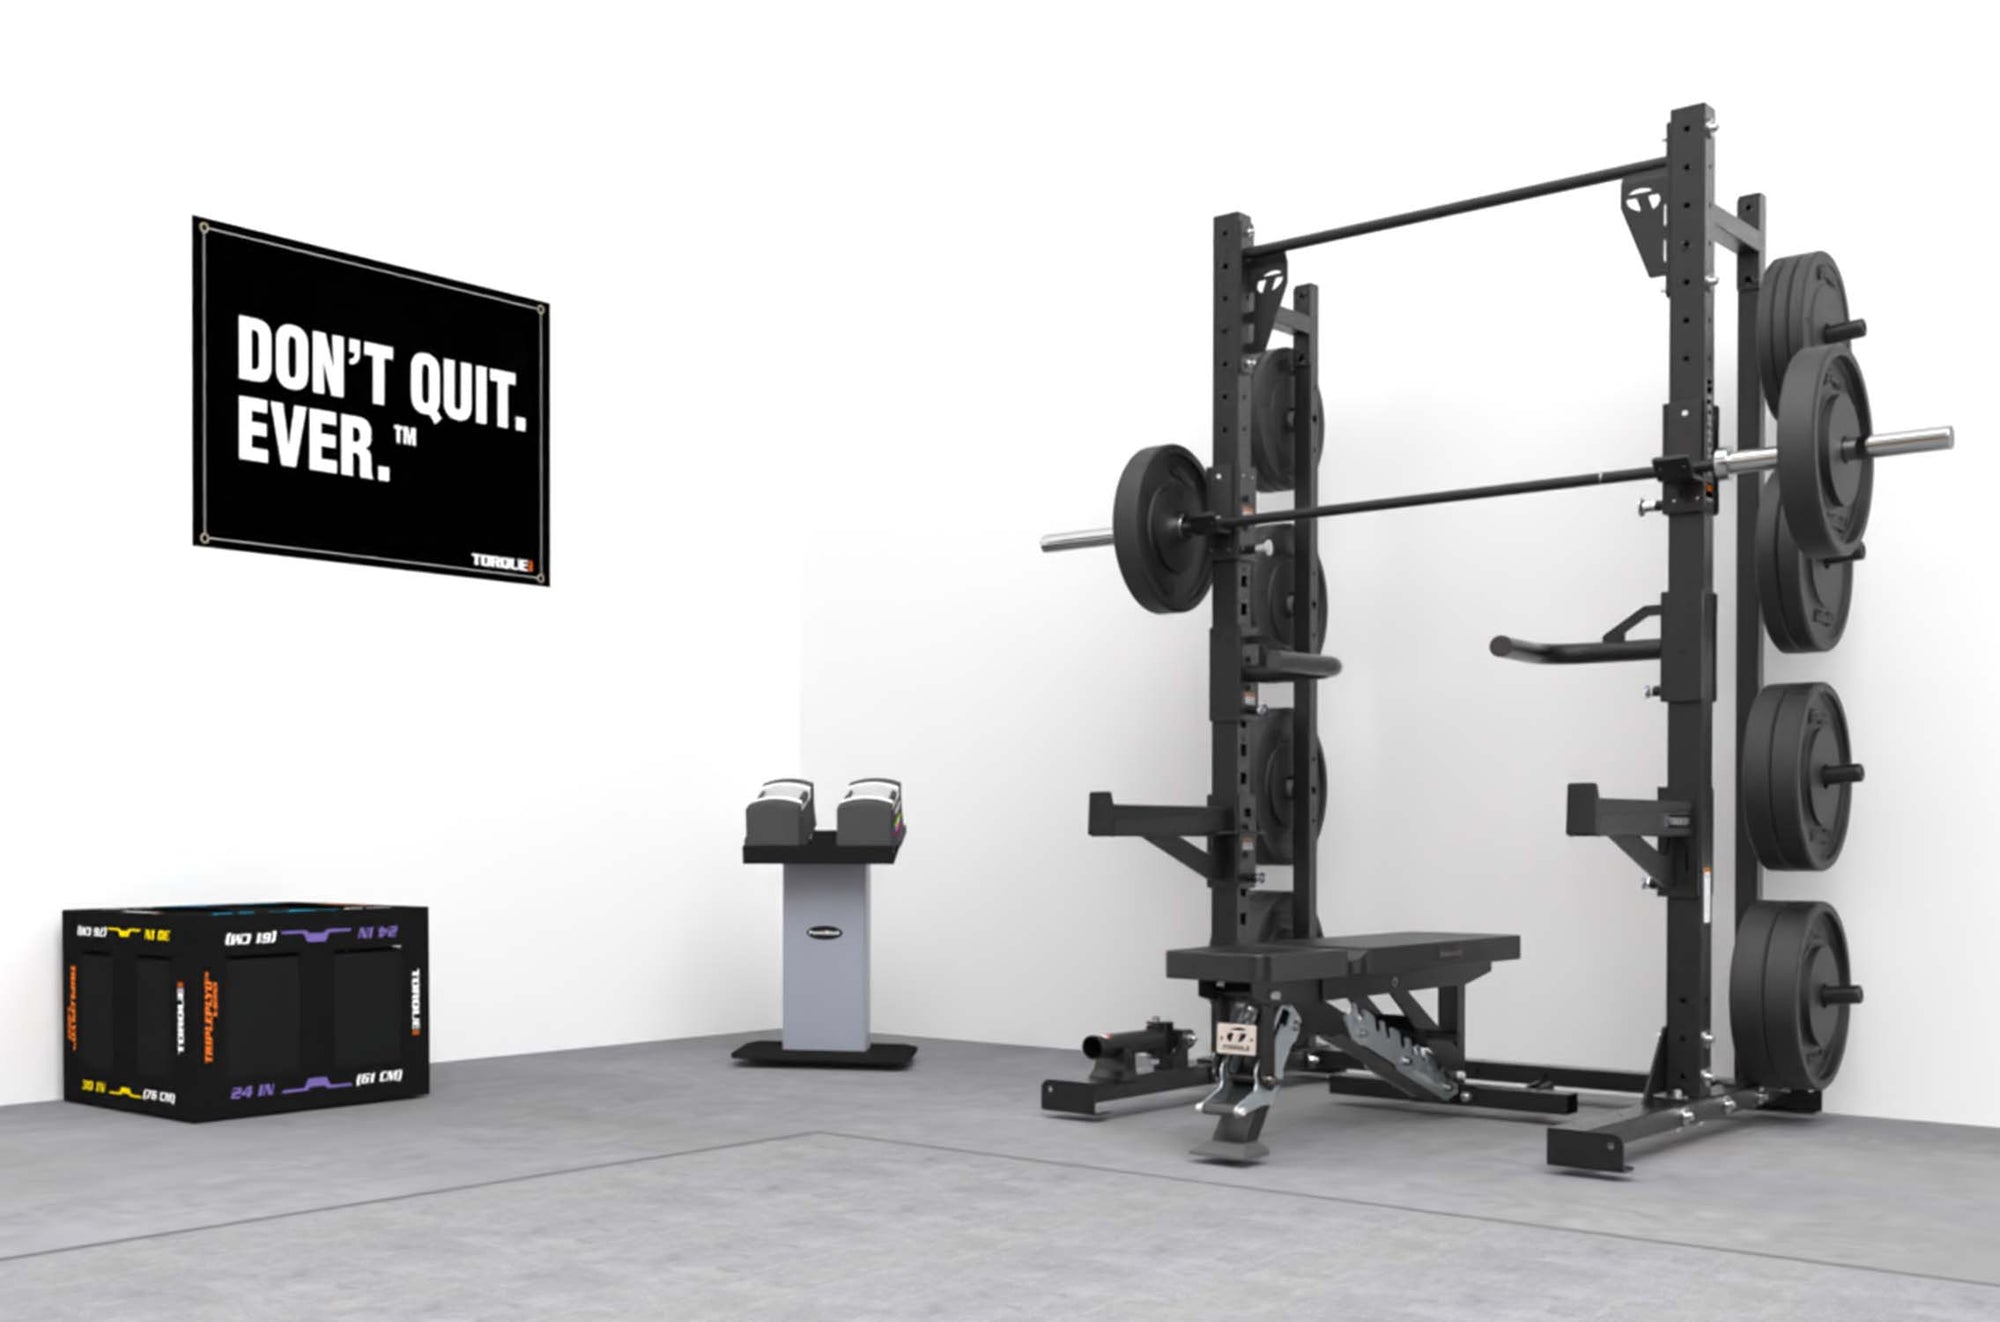 High Squat Rack - Platinum Home Gym Package